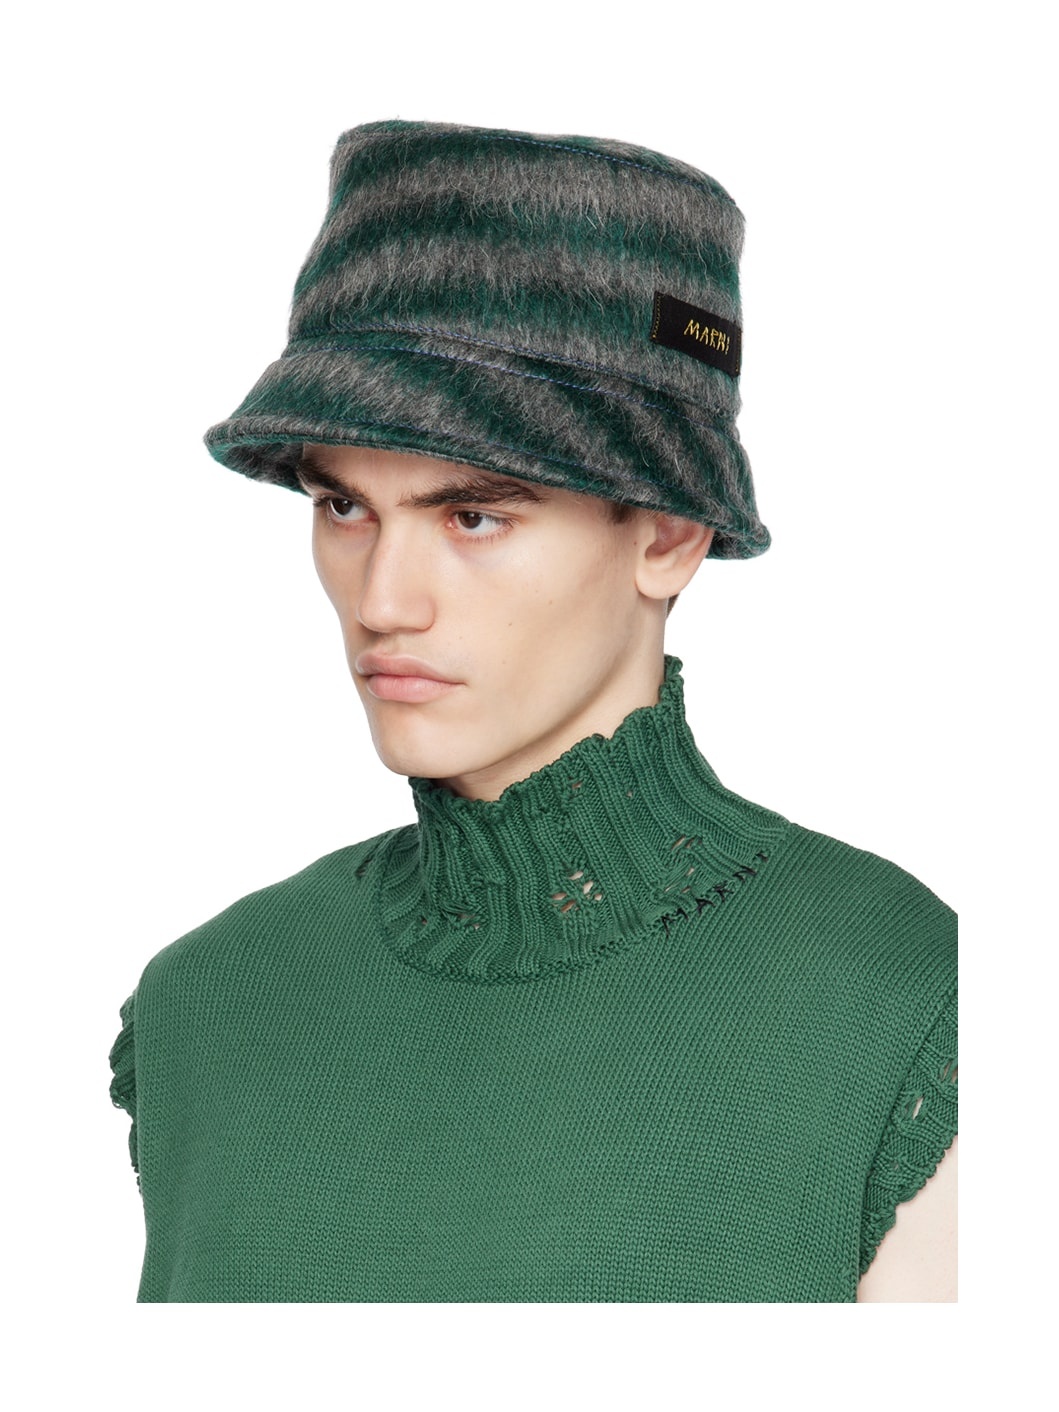 Green & Gray Striped Bucket Hat - 4